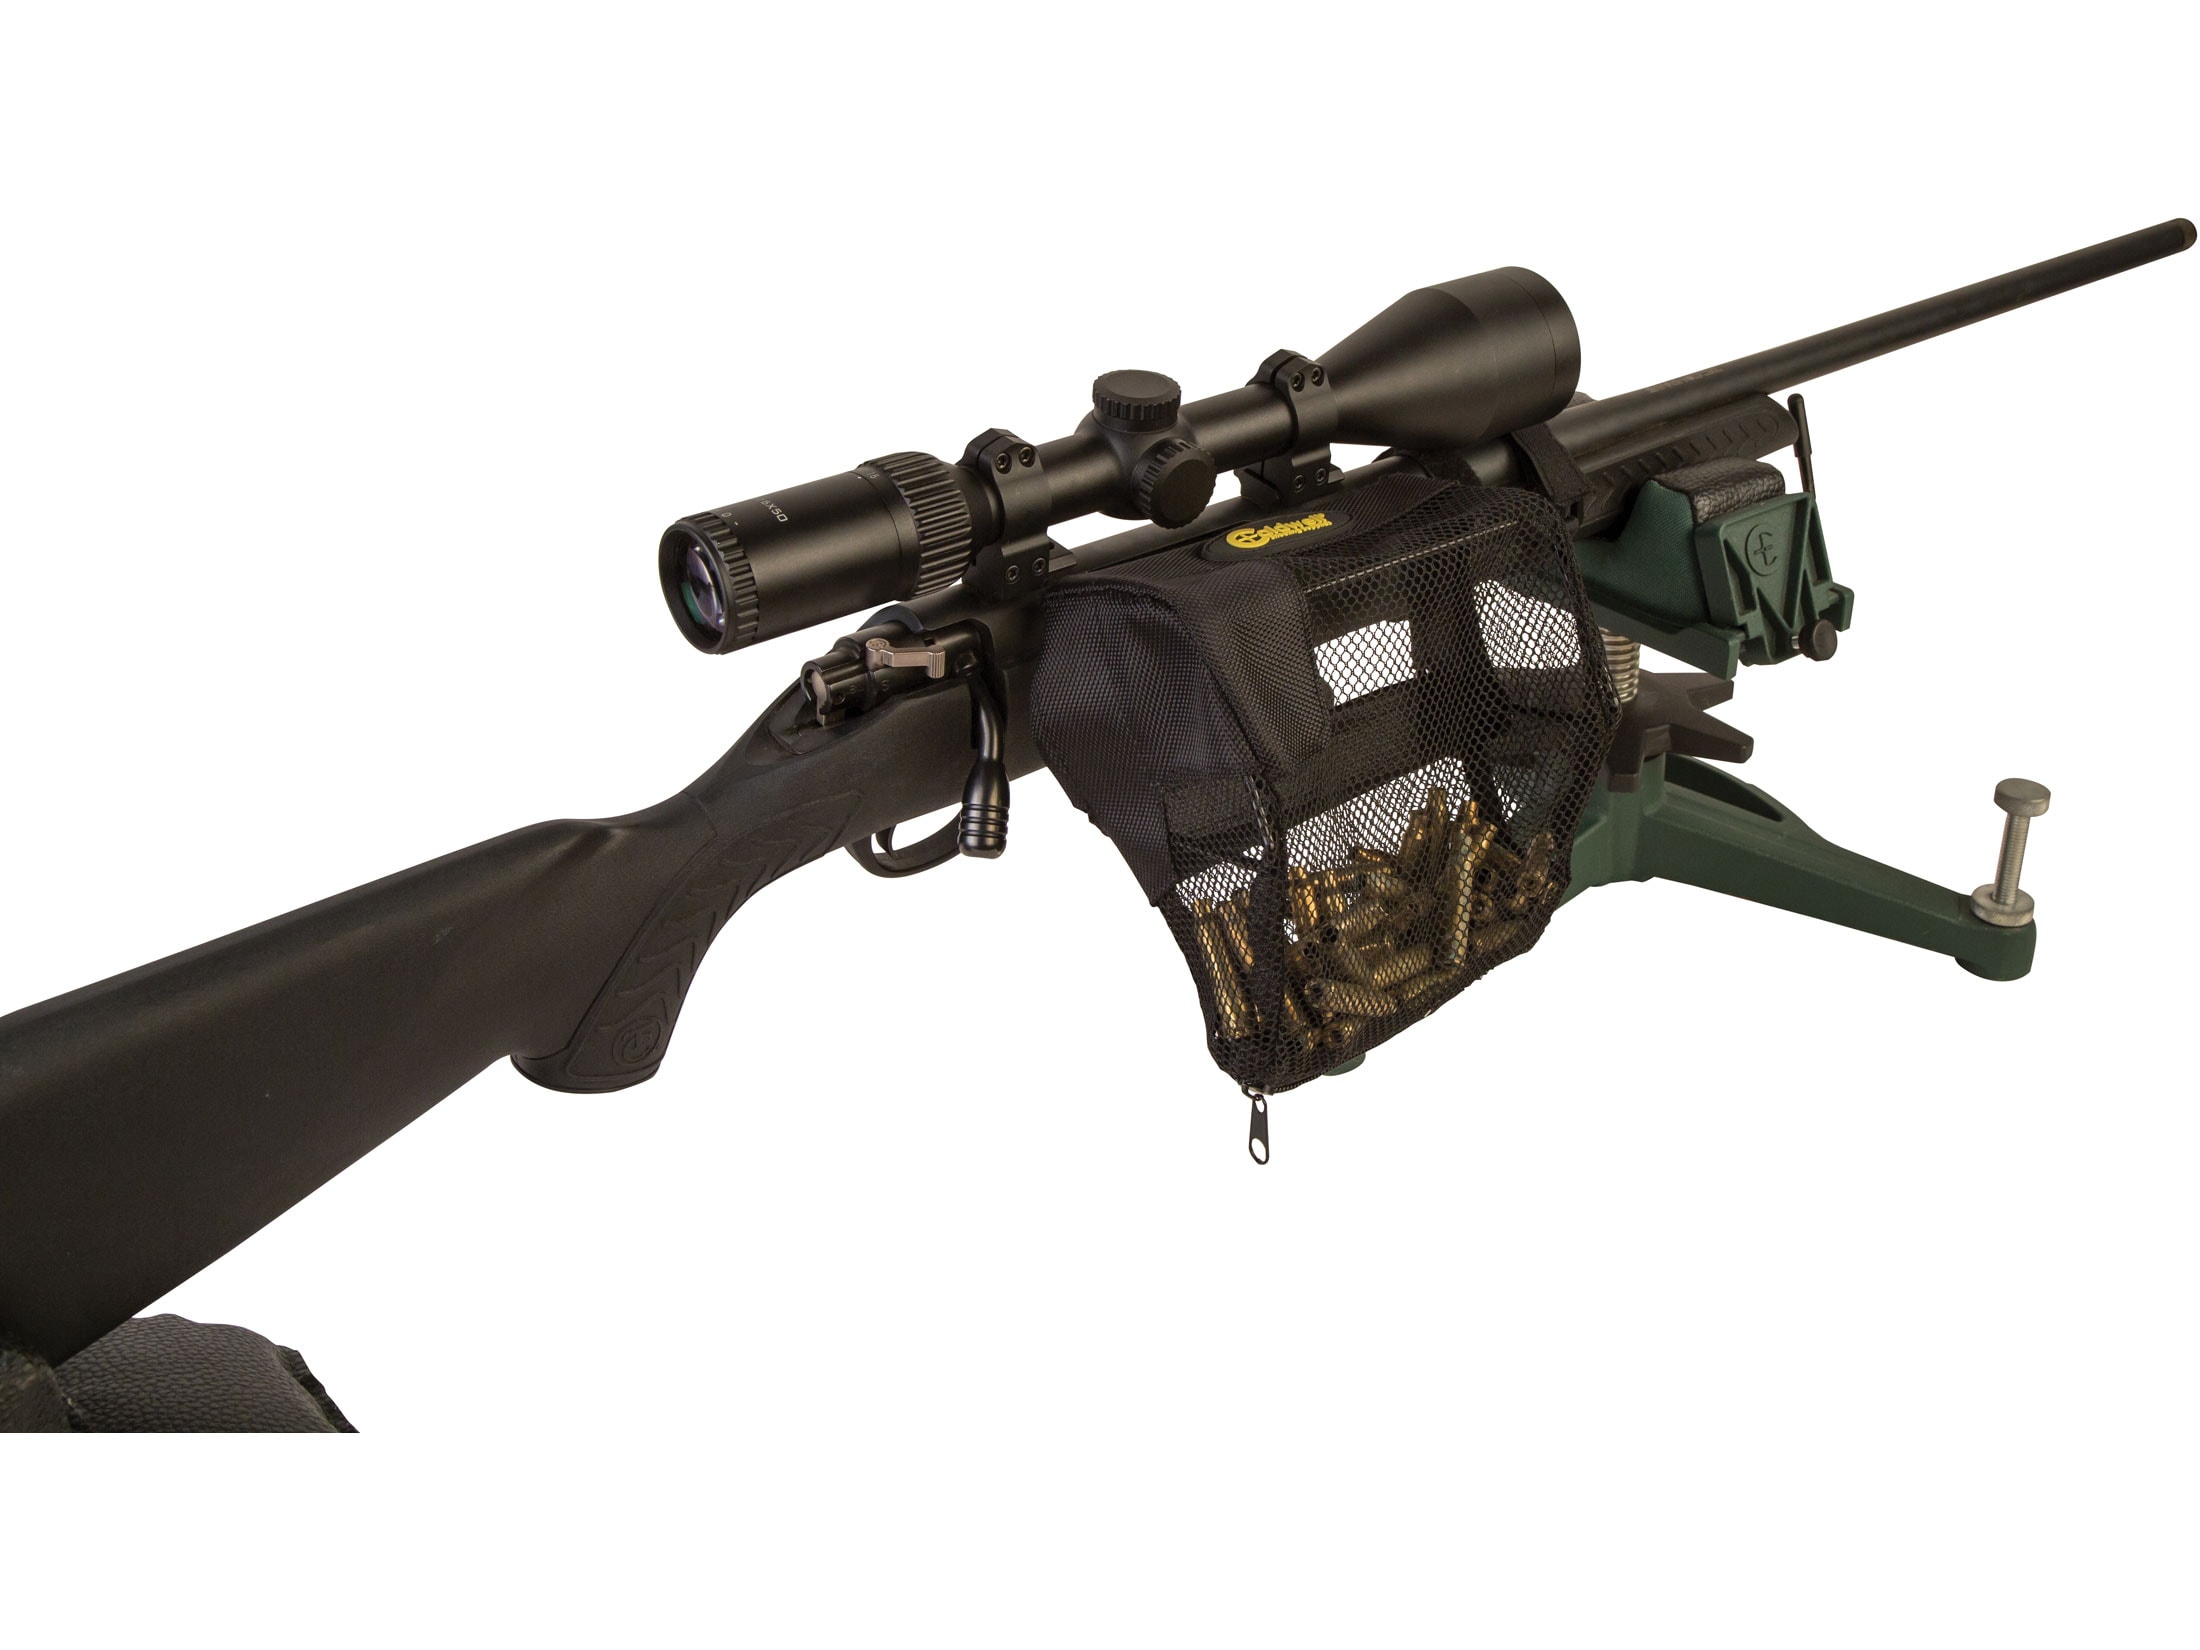 Caldwell AR-15 Brass Catcher Mini Review